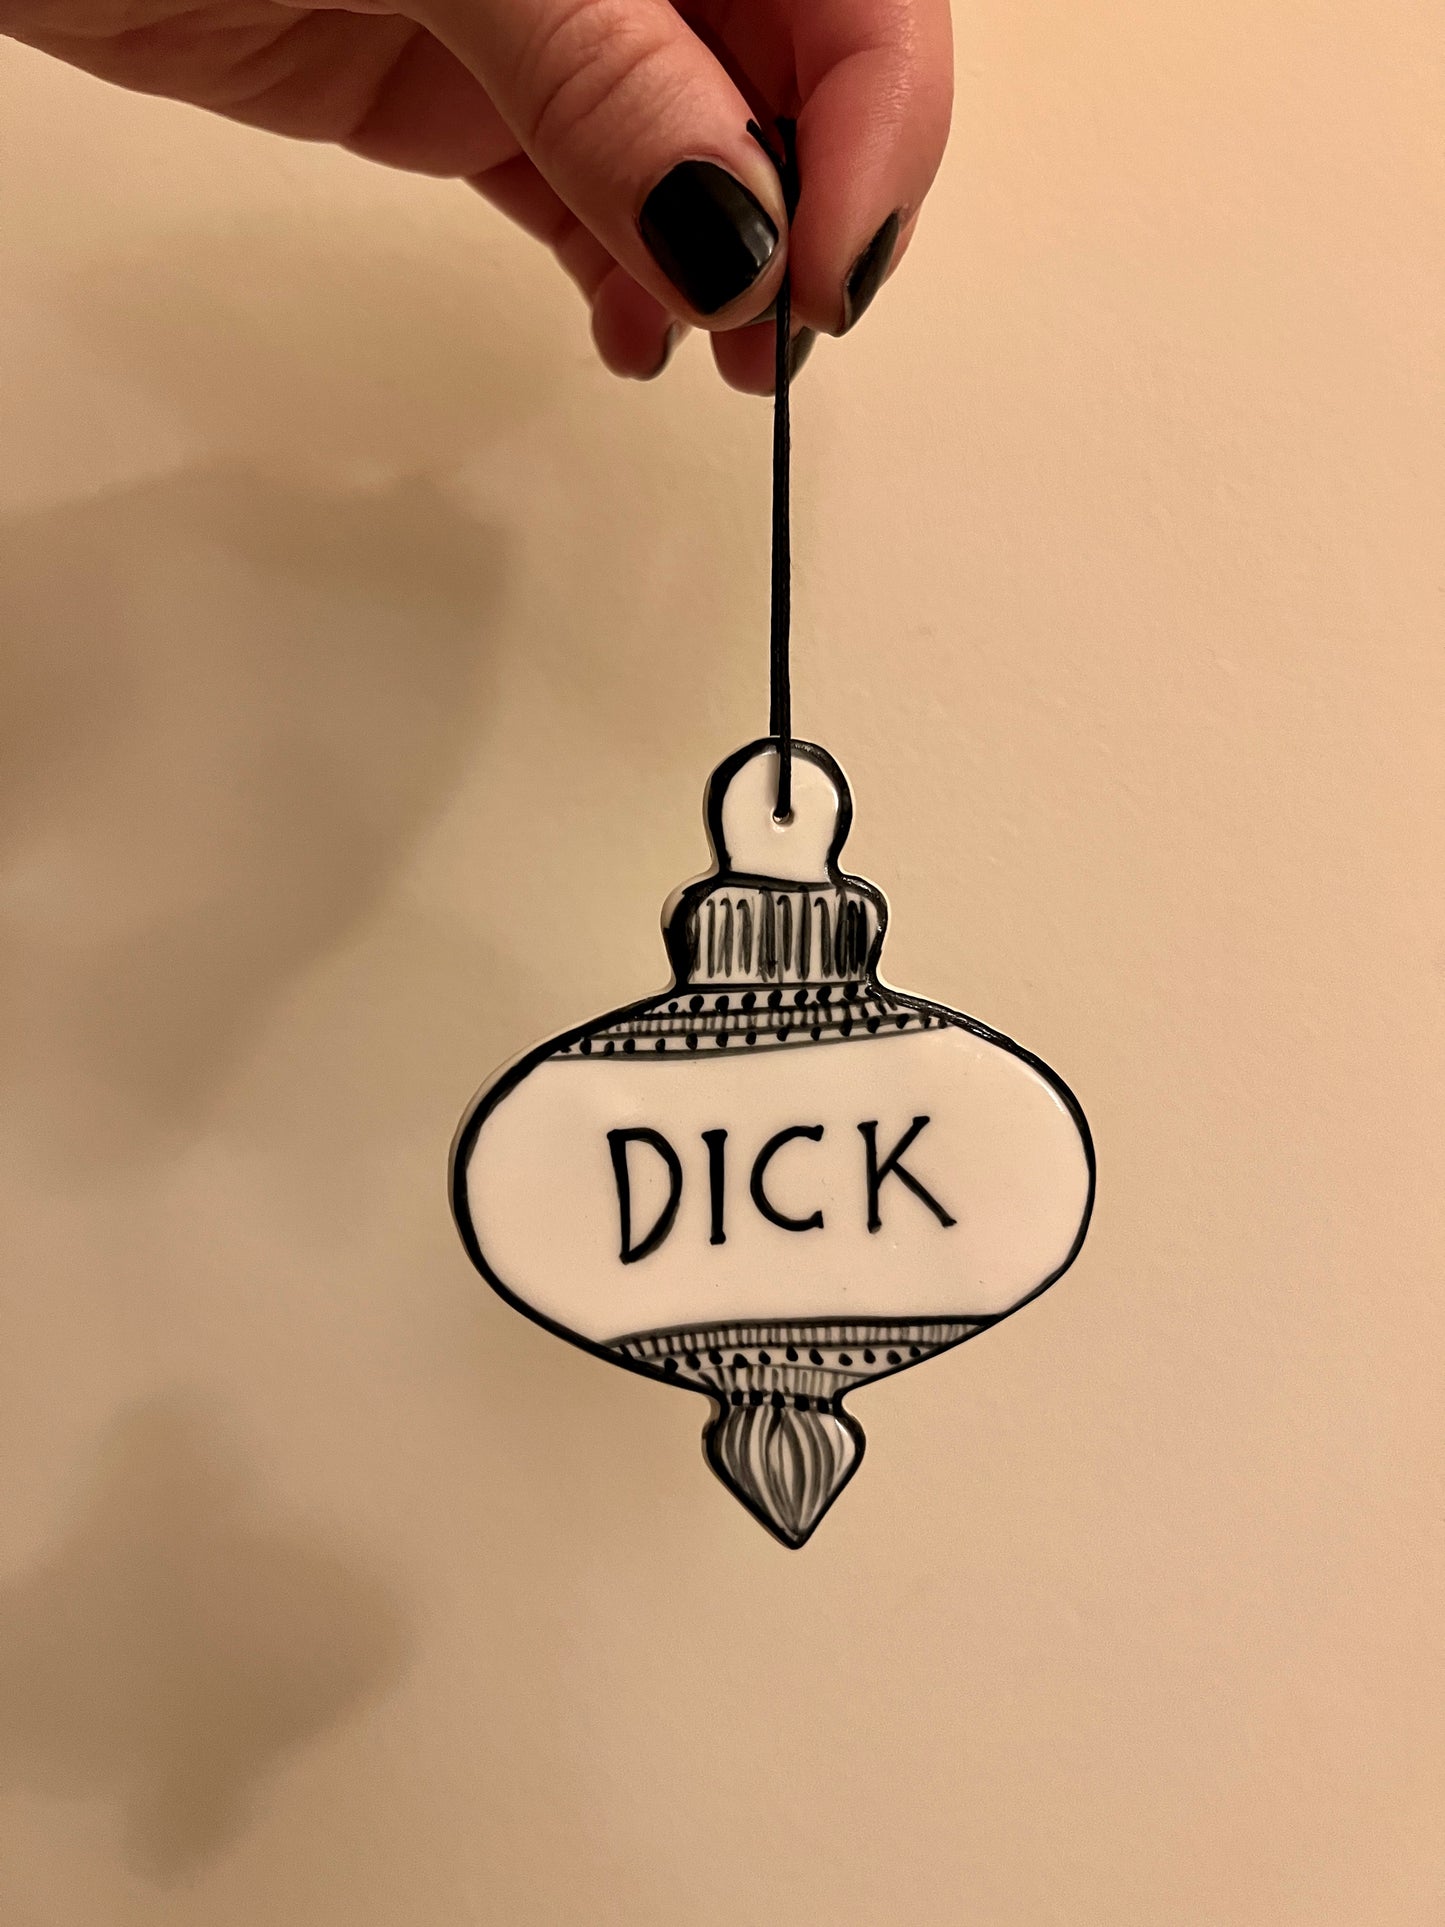 Dick Decoration